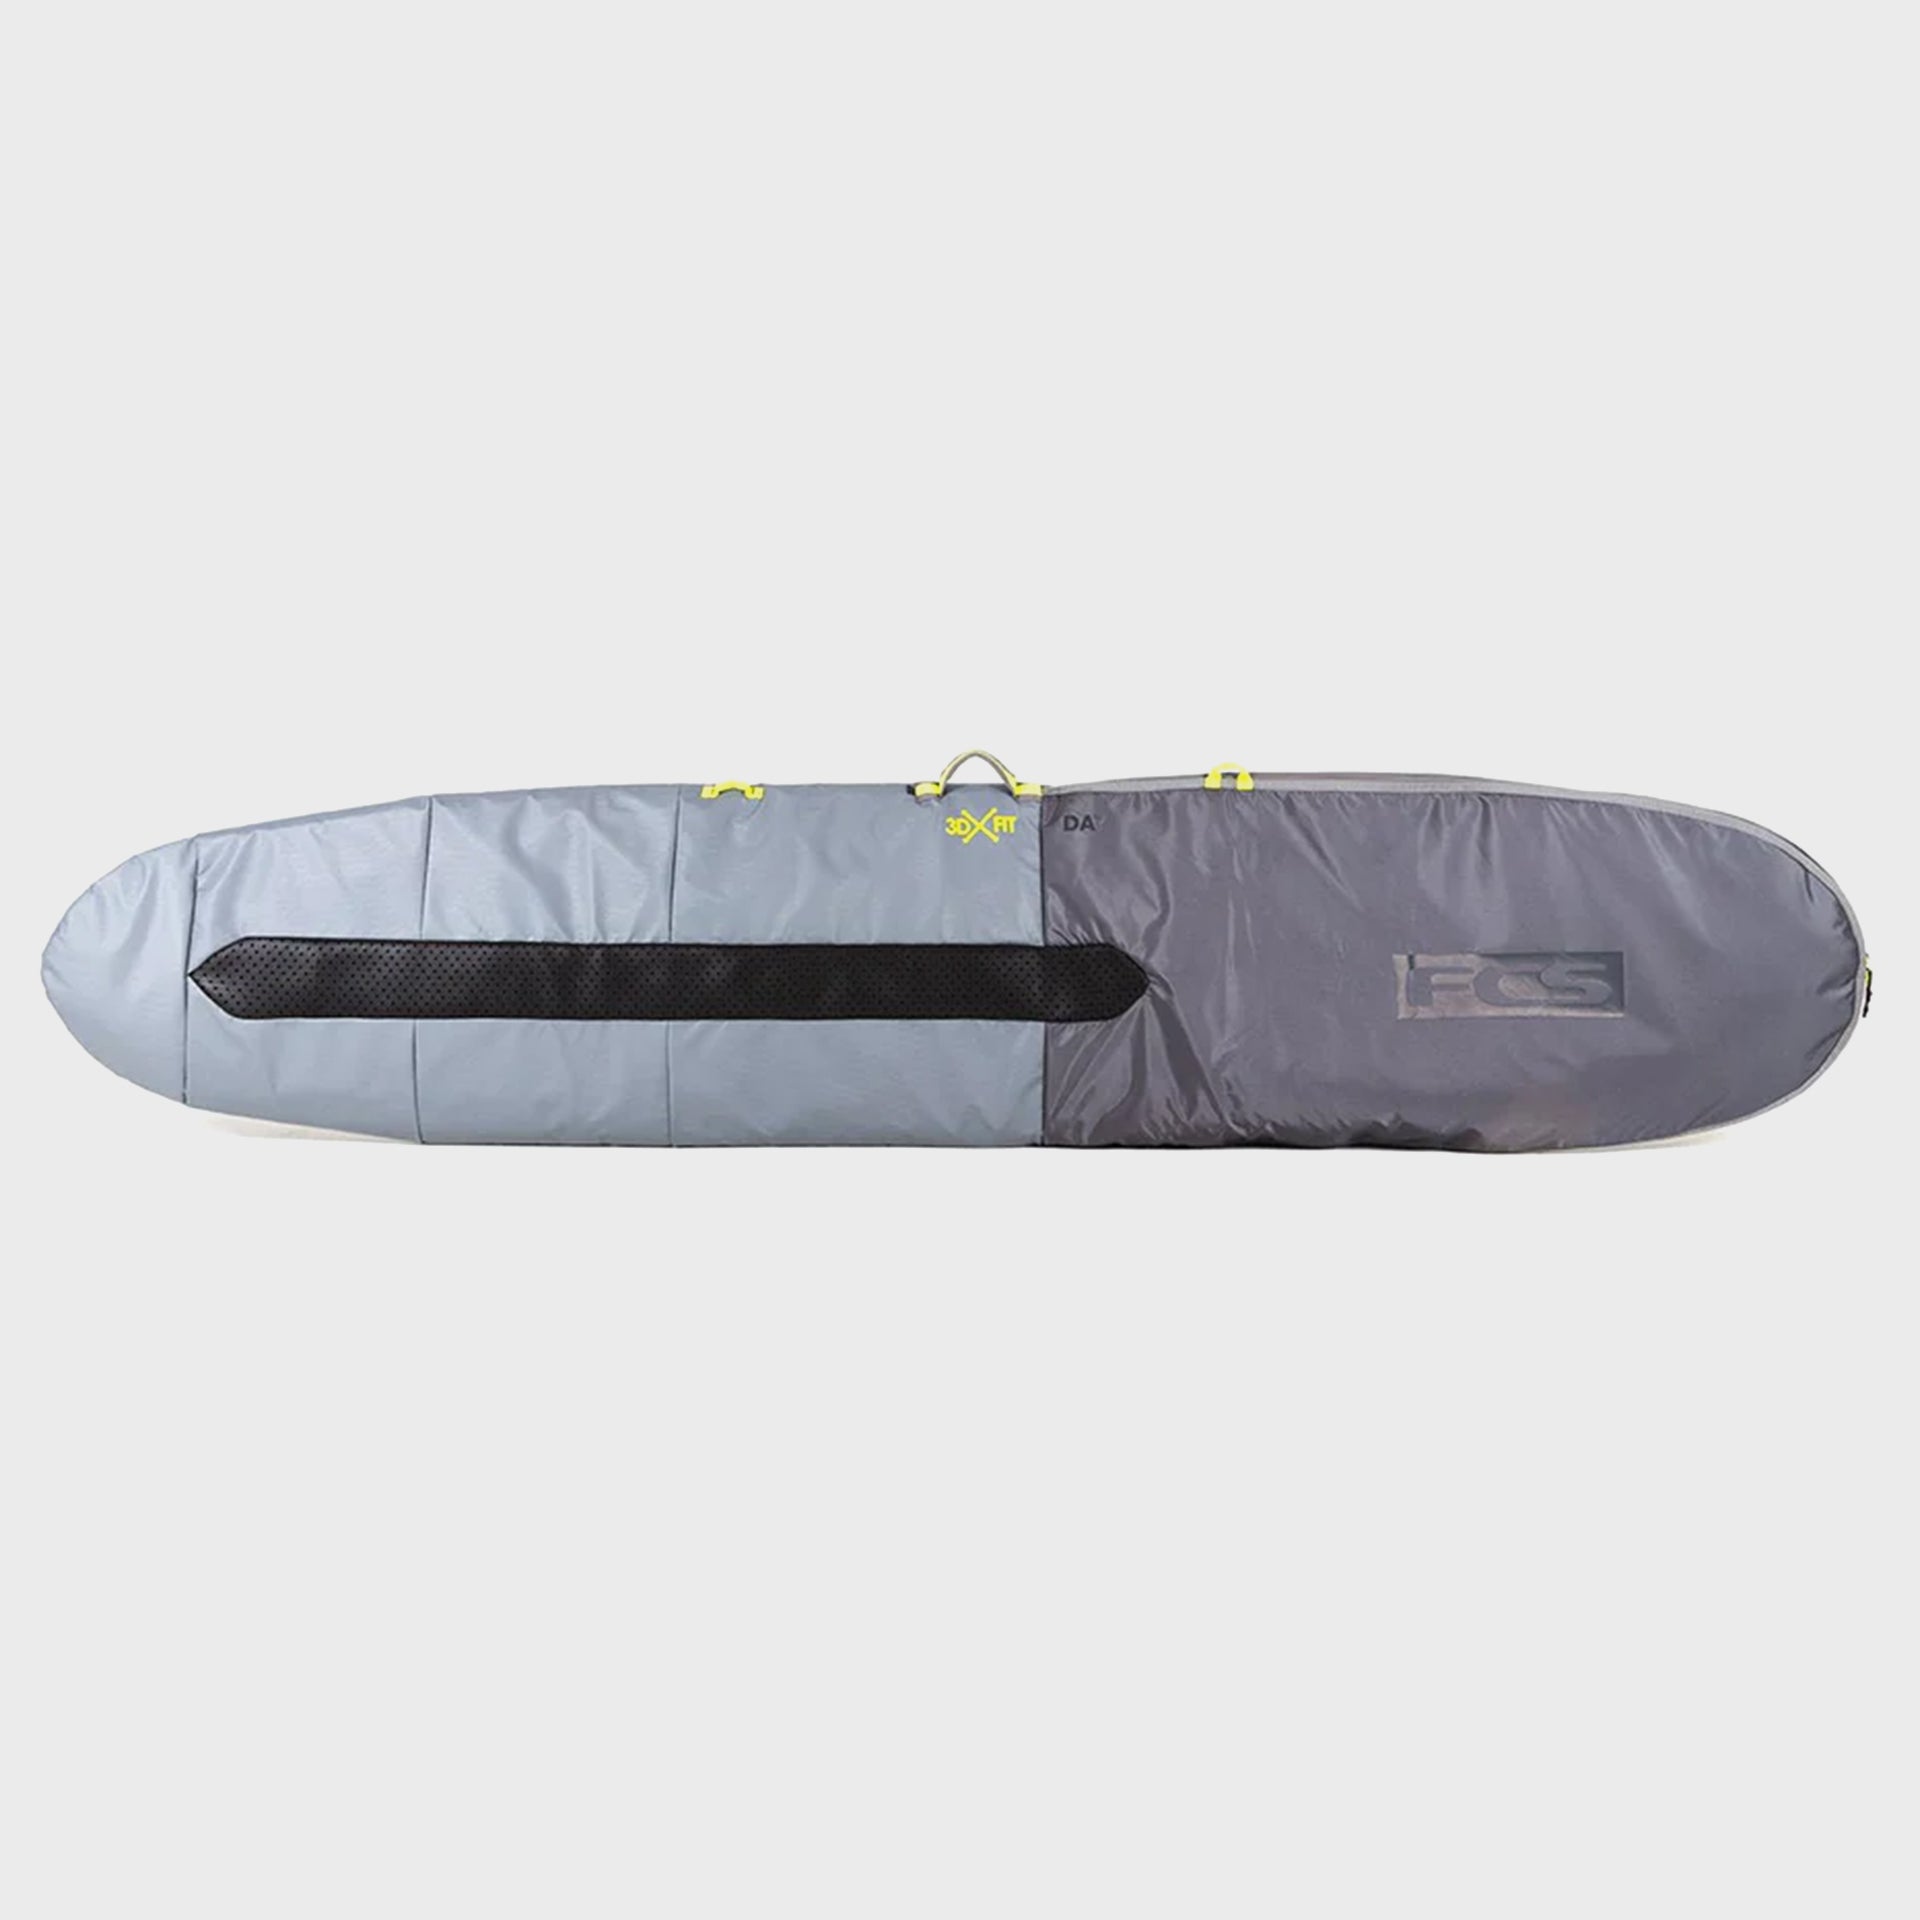 FCS Day Longboard Cover - Cool Grey - ManGo Surfing